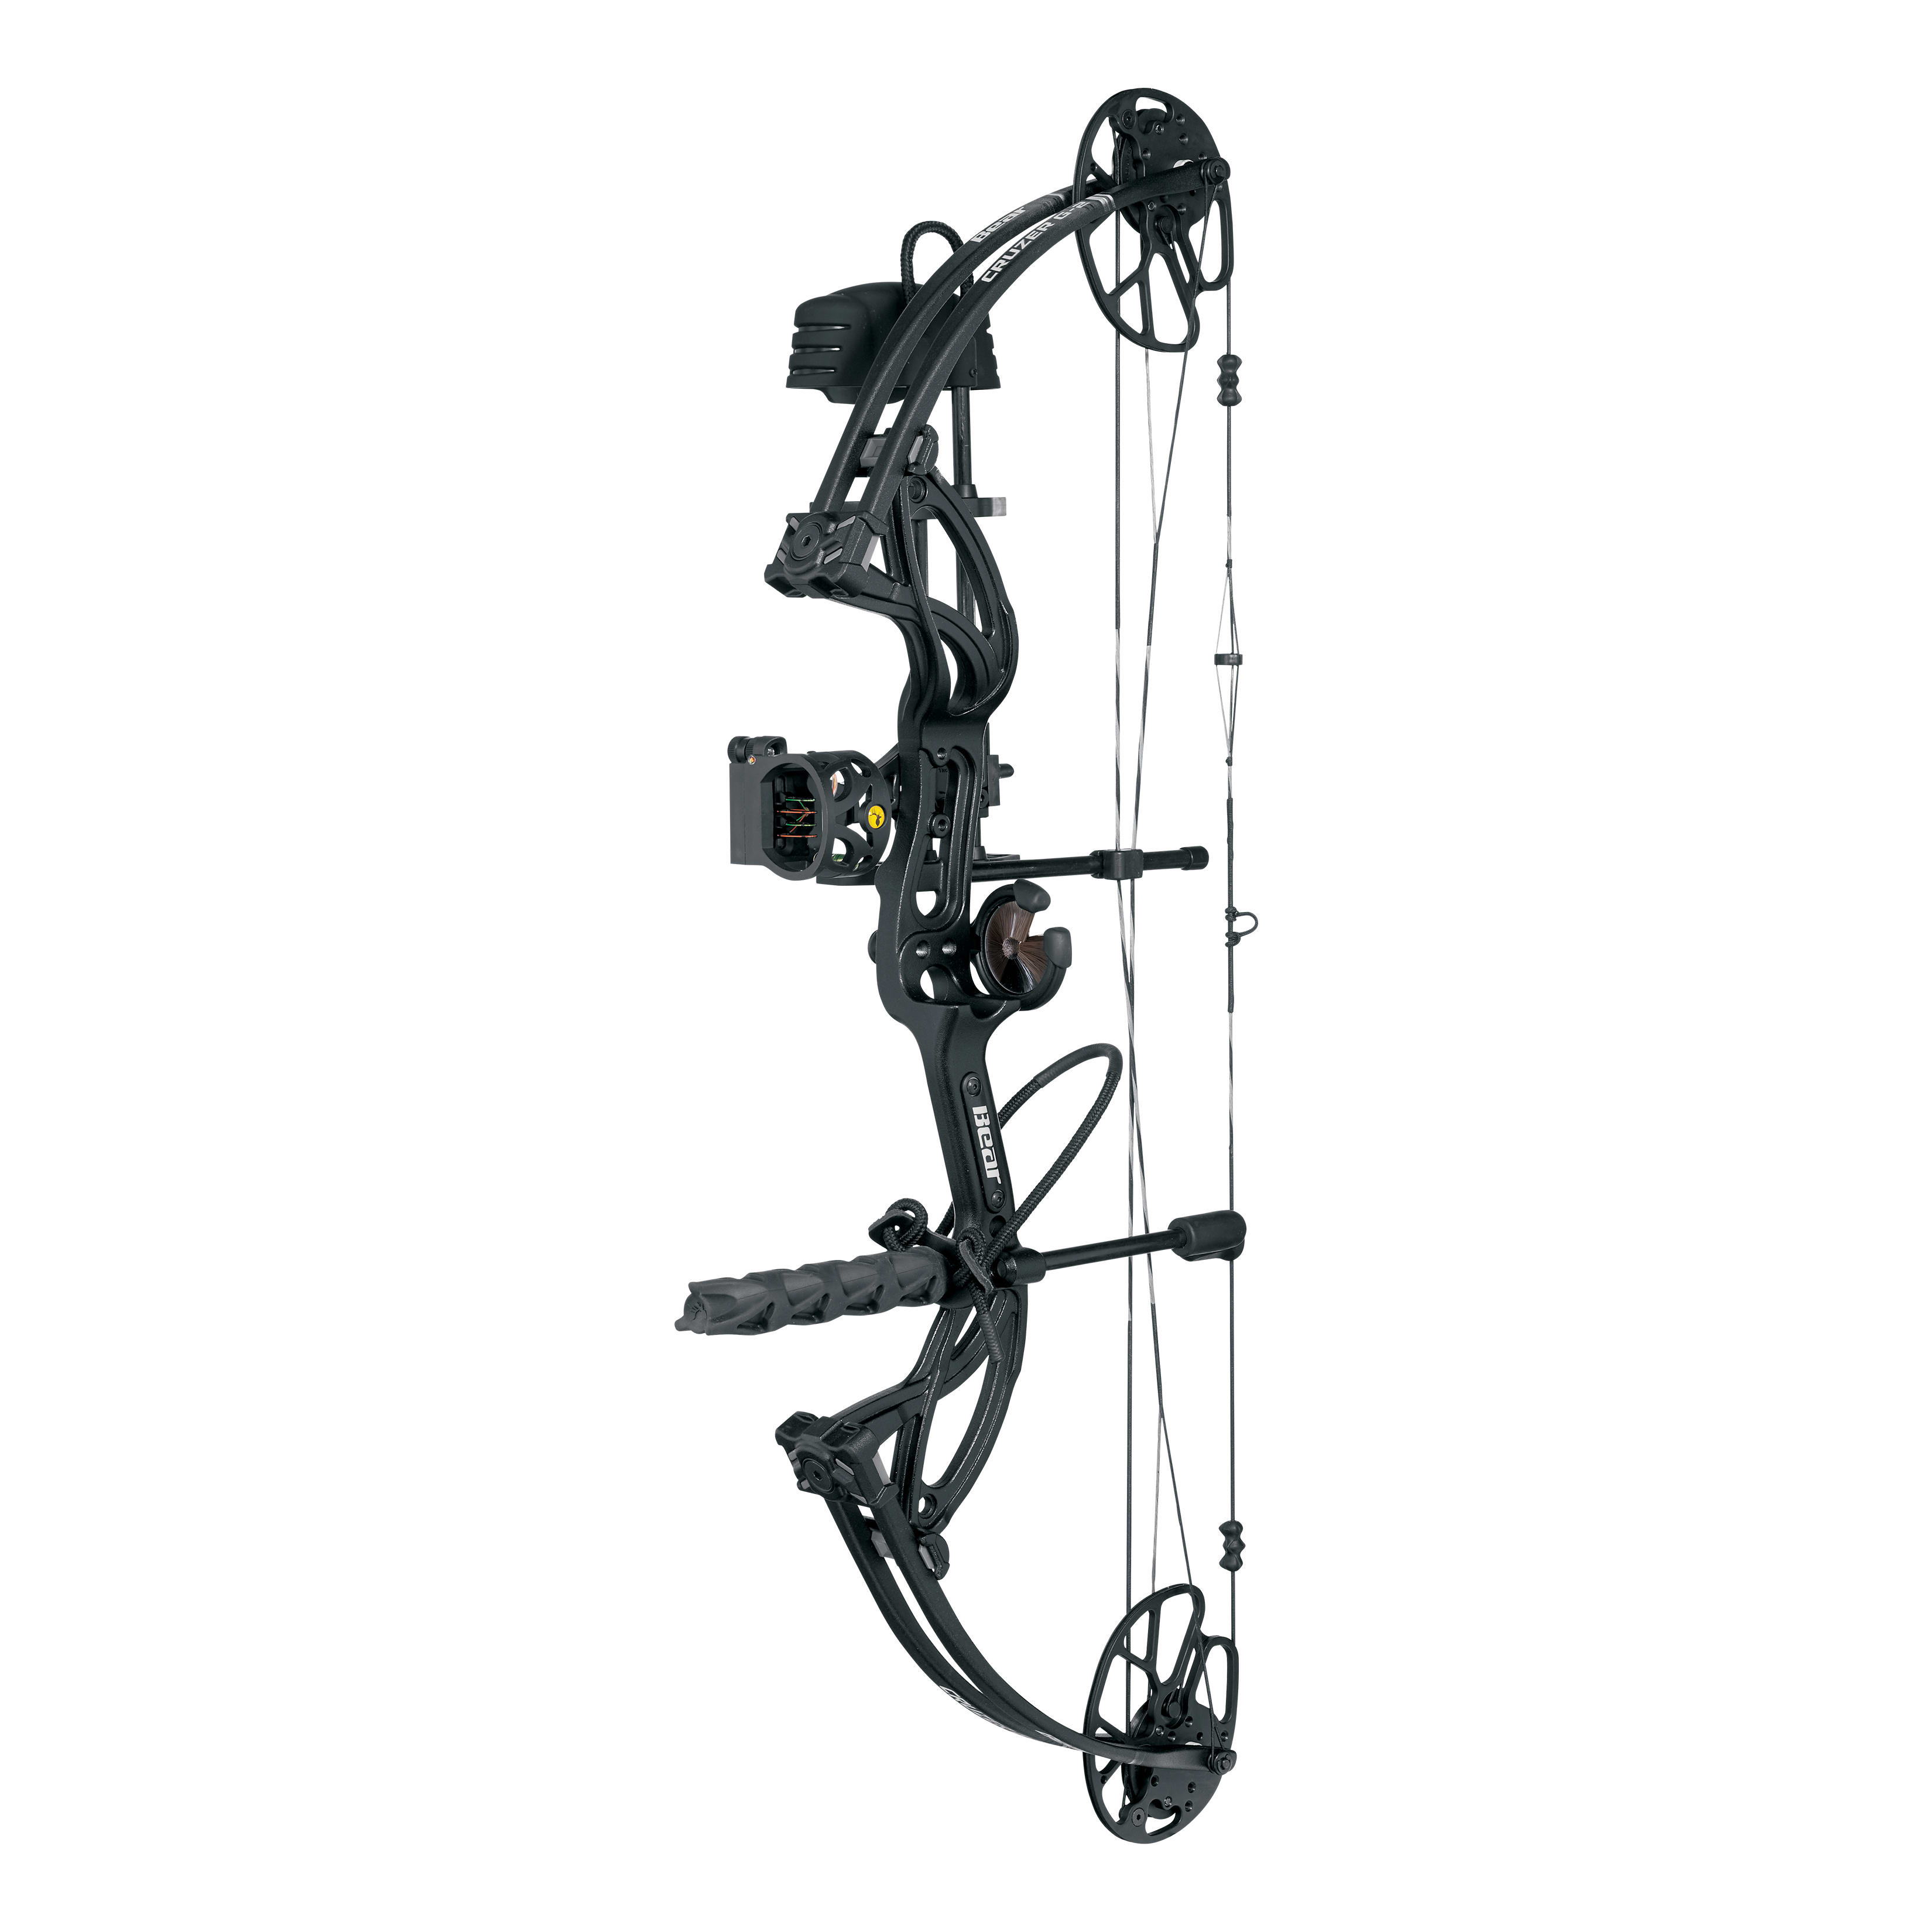 Bear® Archery Cruzer G2 RTH Camo Compound Bow Package - Black